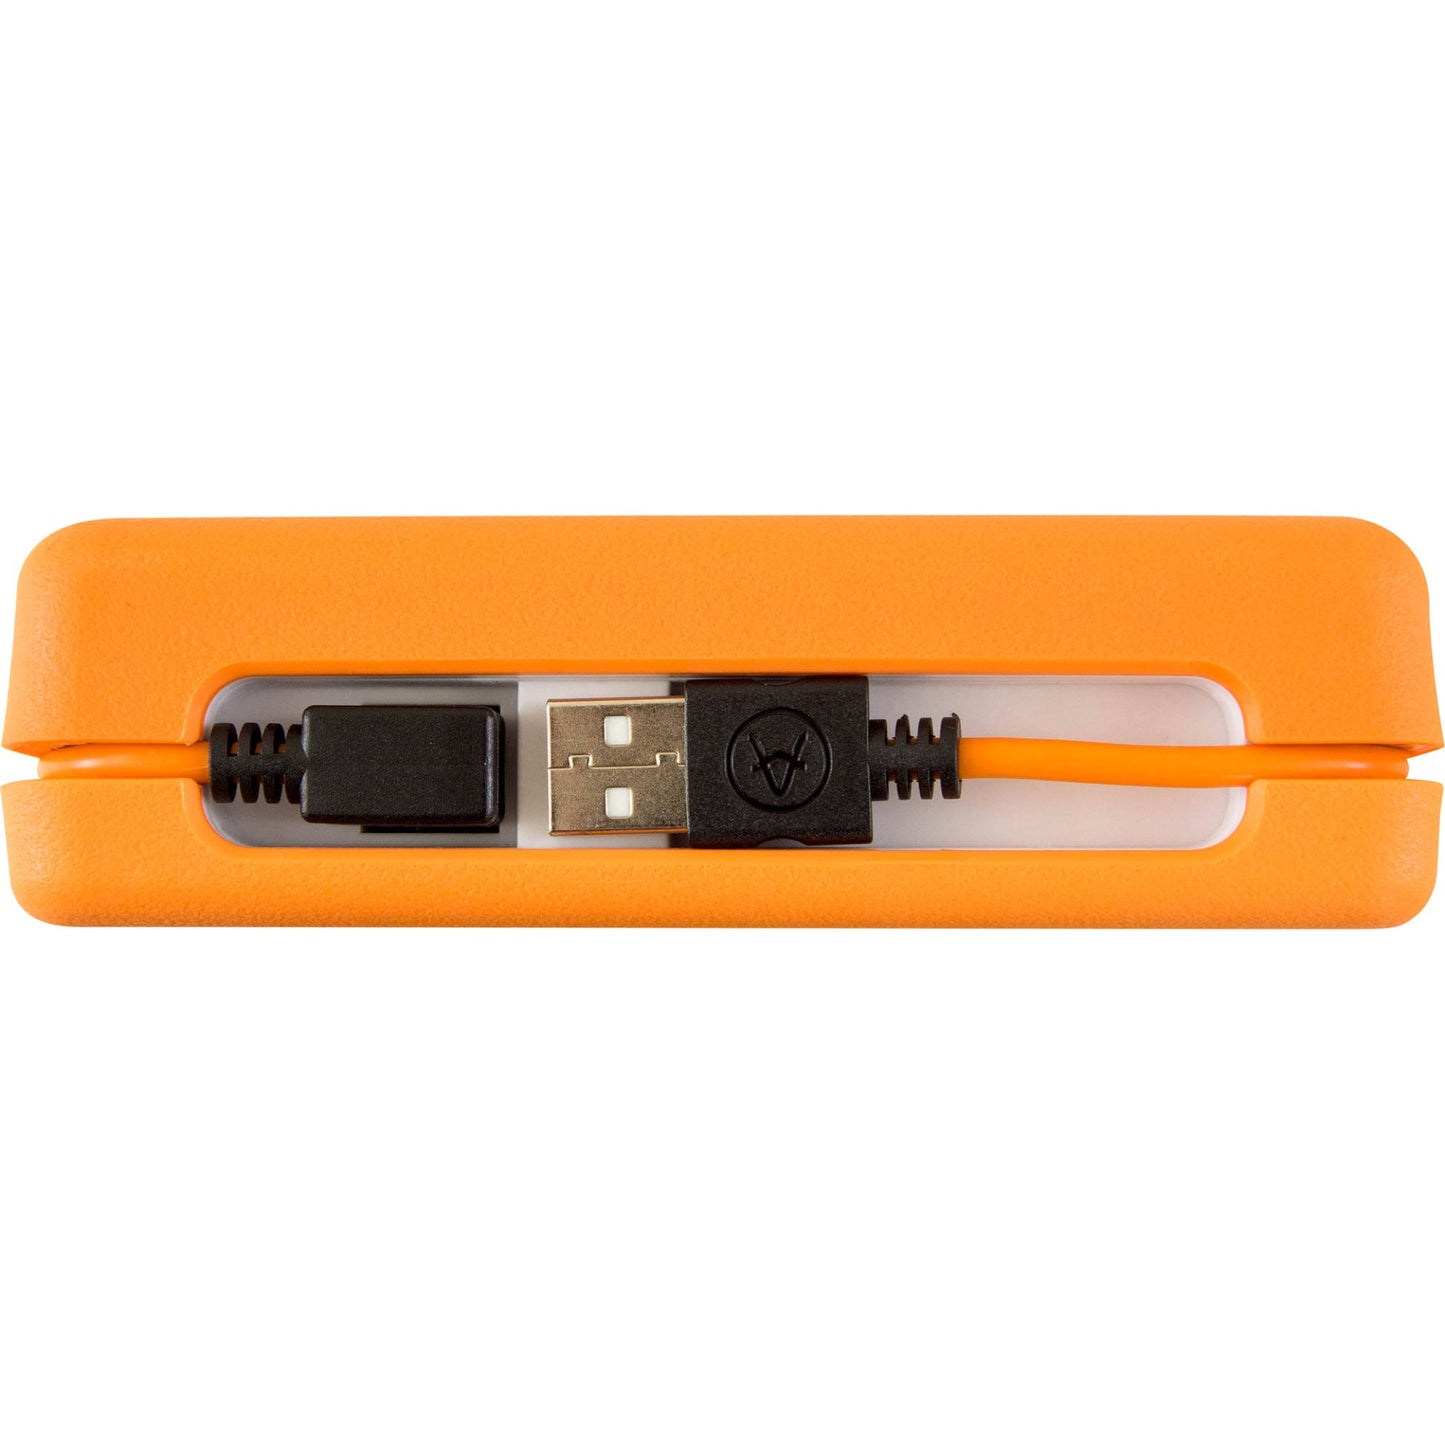 Arturia MicroLab - Compact USB-MIDI Controller - Orange